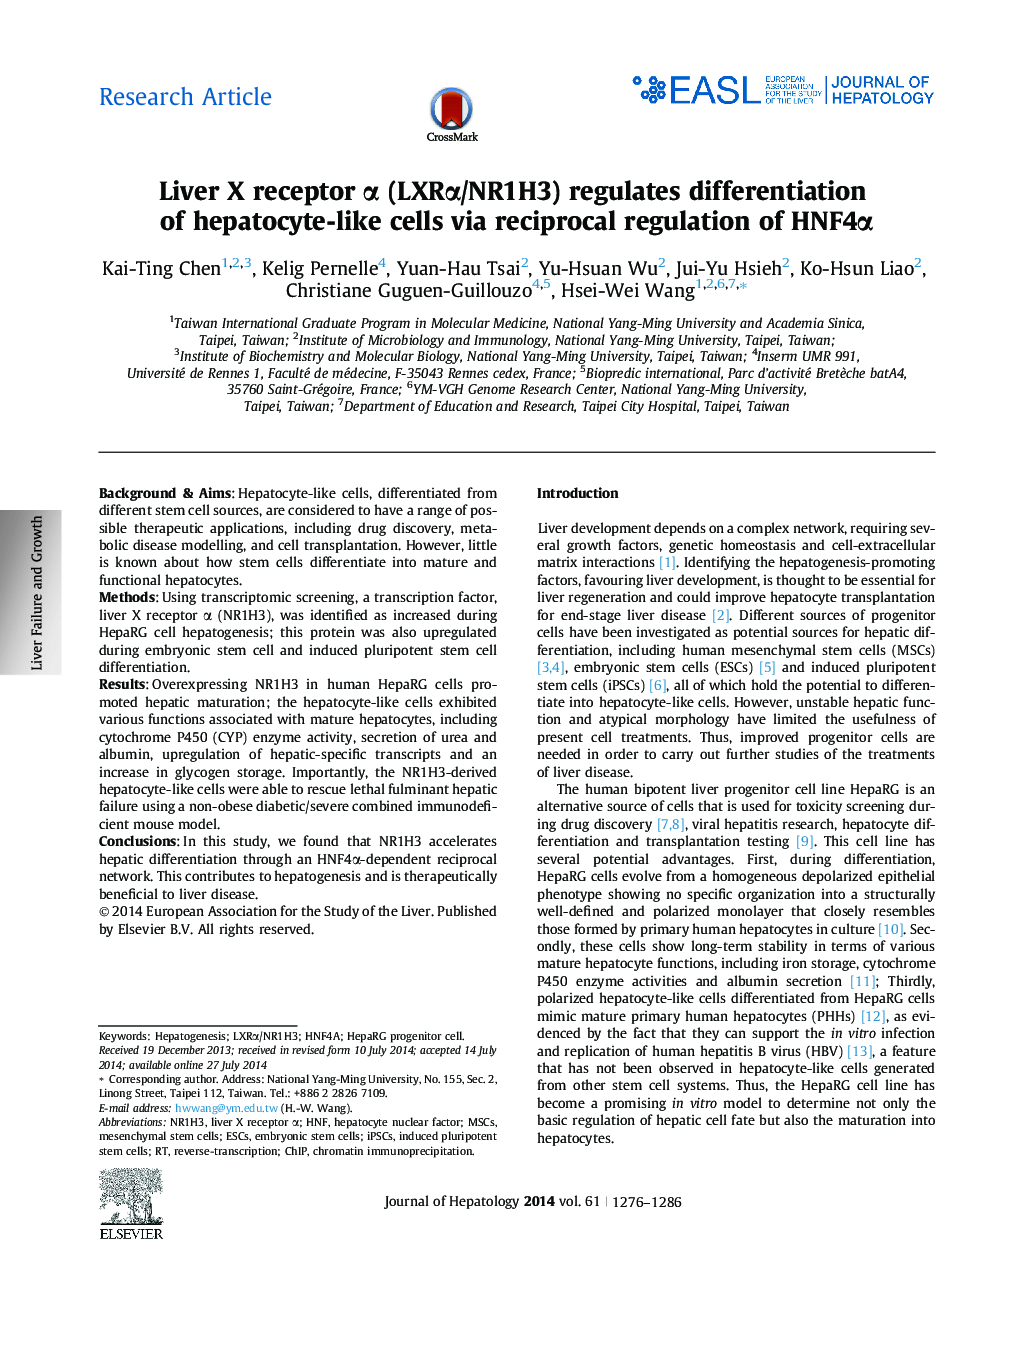 Research ArticleLiver X receptor Î± (LXRÎ±/NR1H3) regulates differentiation of hepatocyte-like cells via reciprocal regulation of HNF4Î±